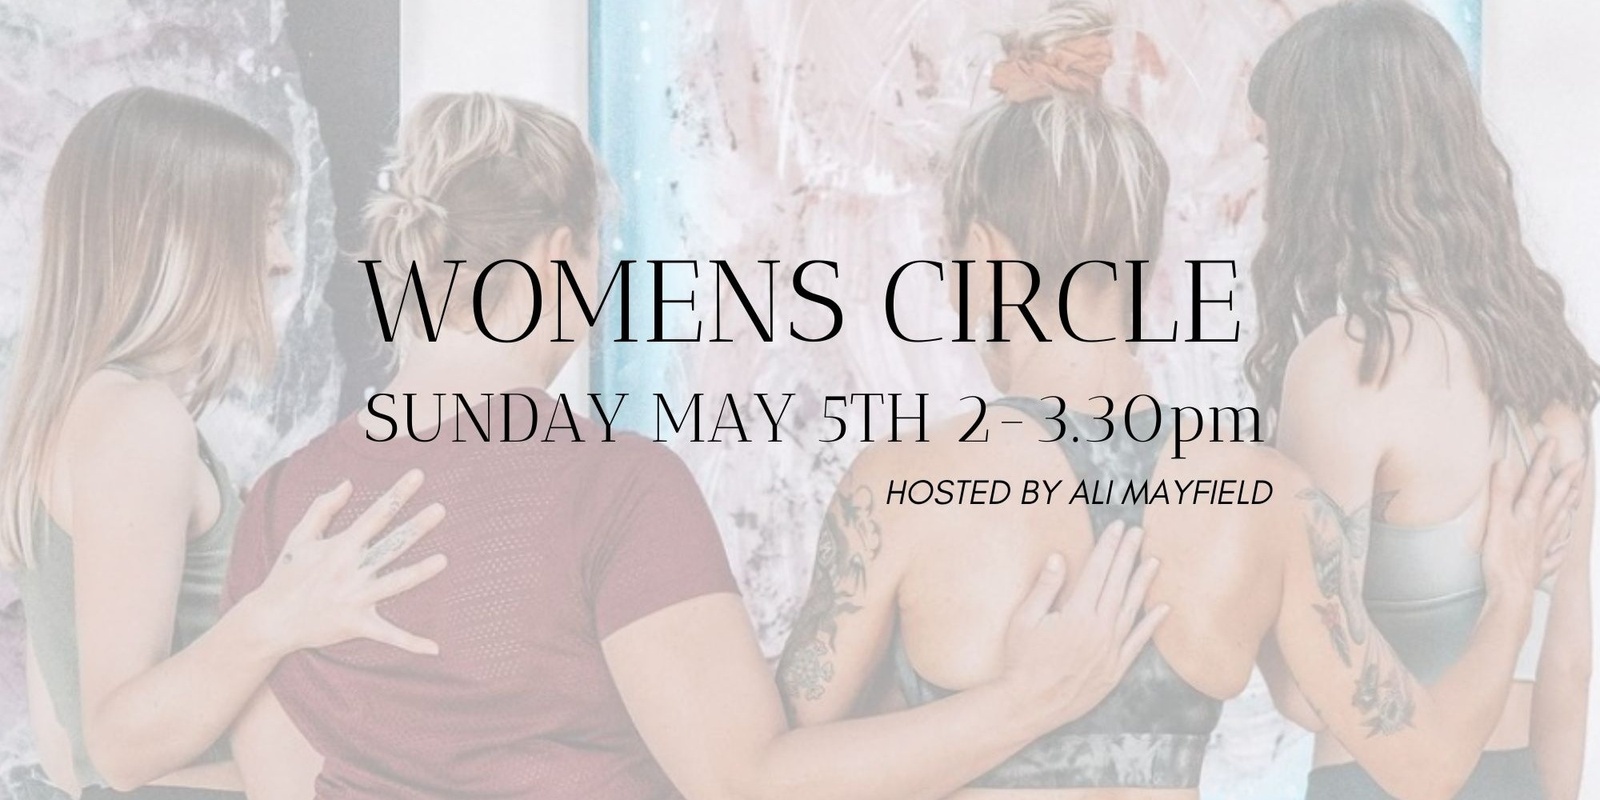 Banner image for Coolum Beach Women's Circle